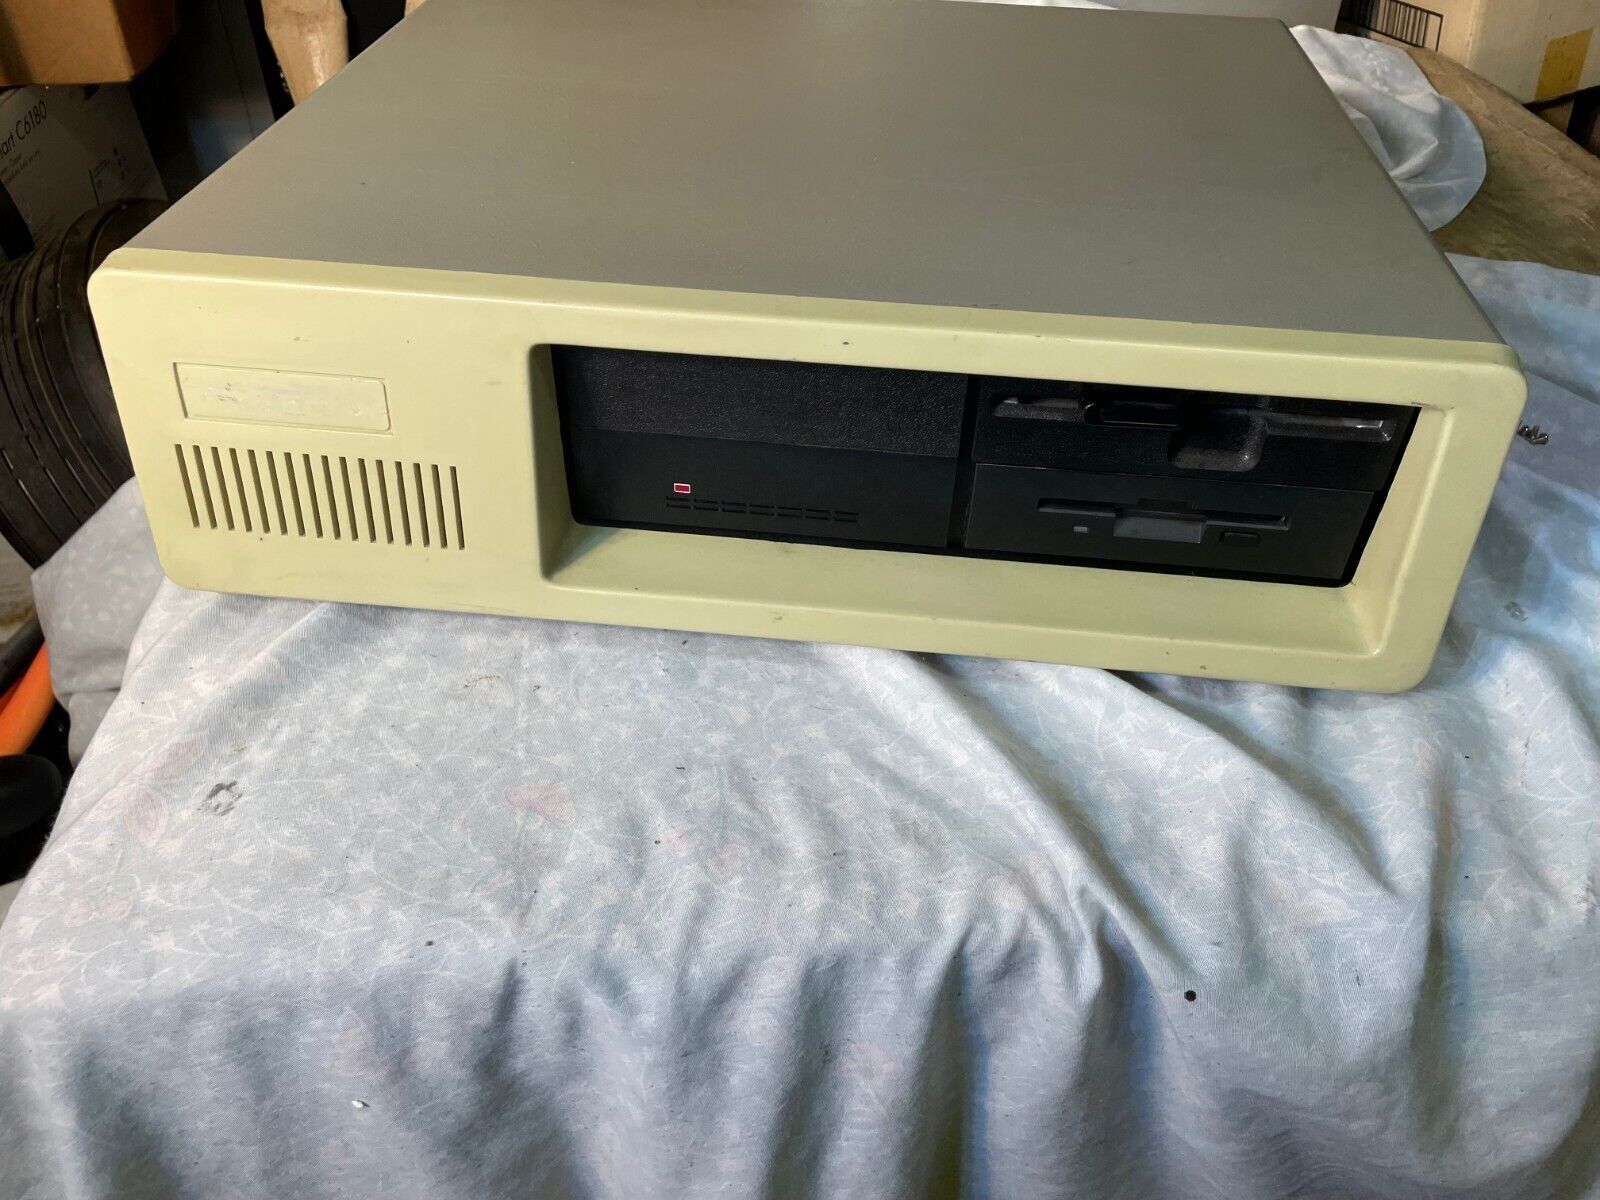 IBM 5160 Clone Computer